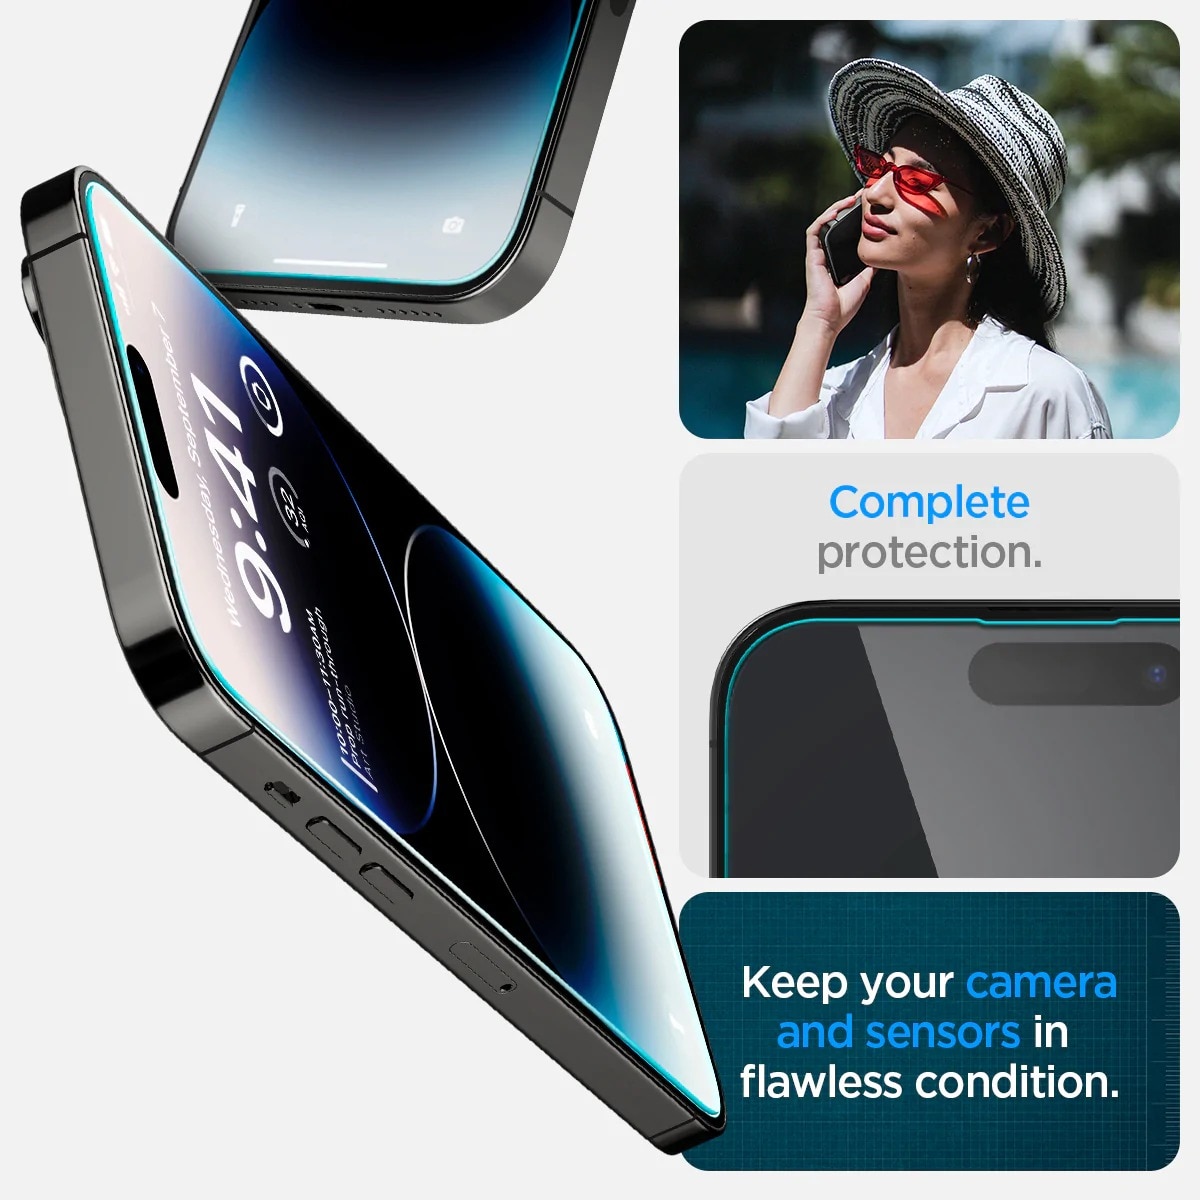 Screen Protector GLAS.tR EZ Fit (2 Stück) iPhone 14 Pro